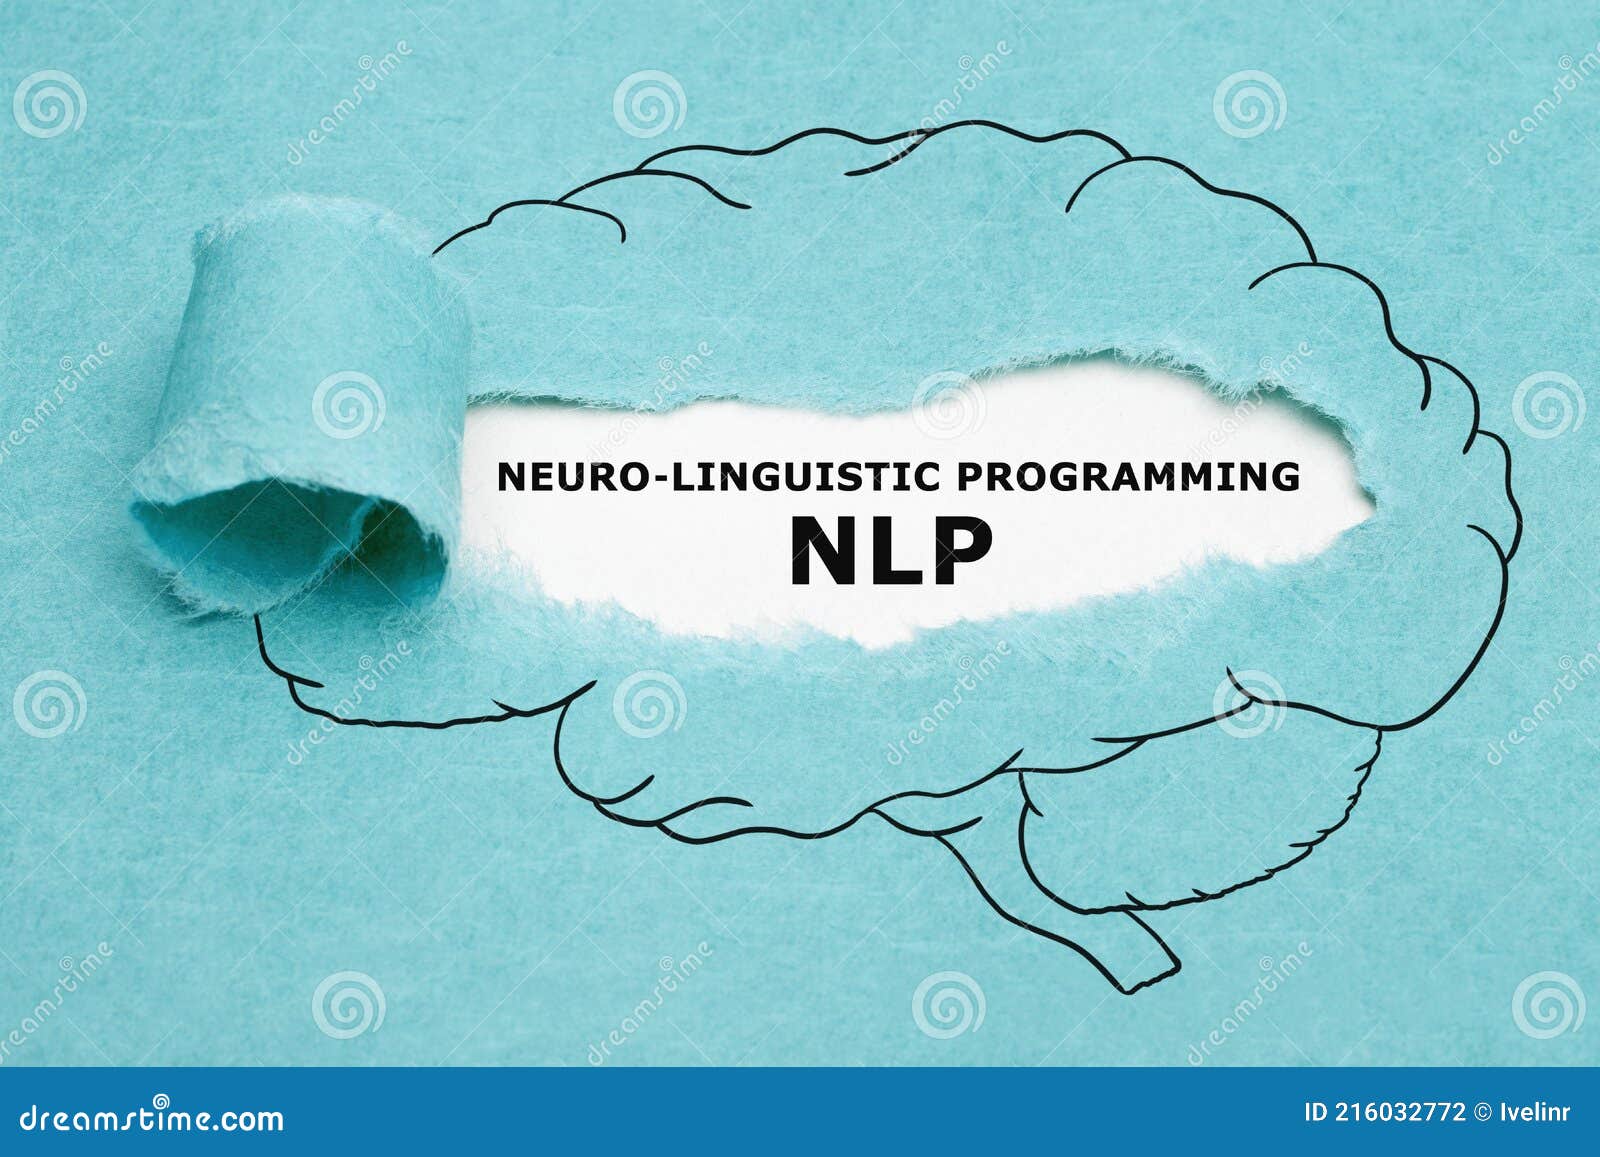 nlp neuro linguistic programming concept